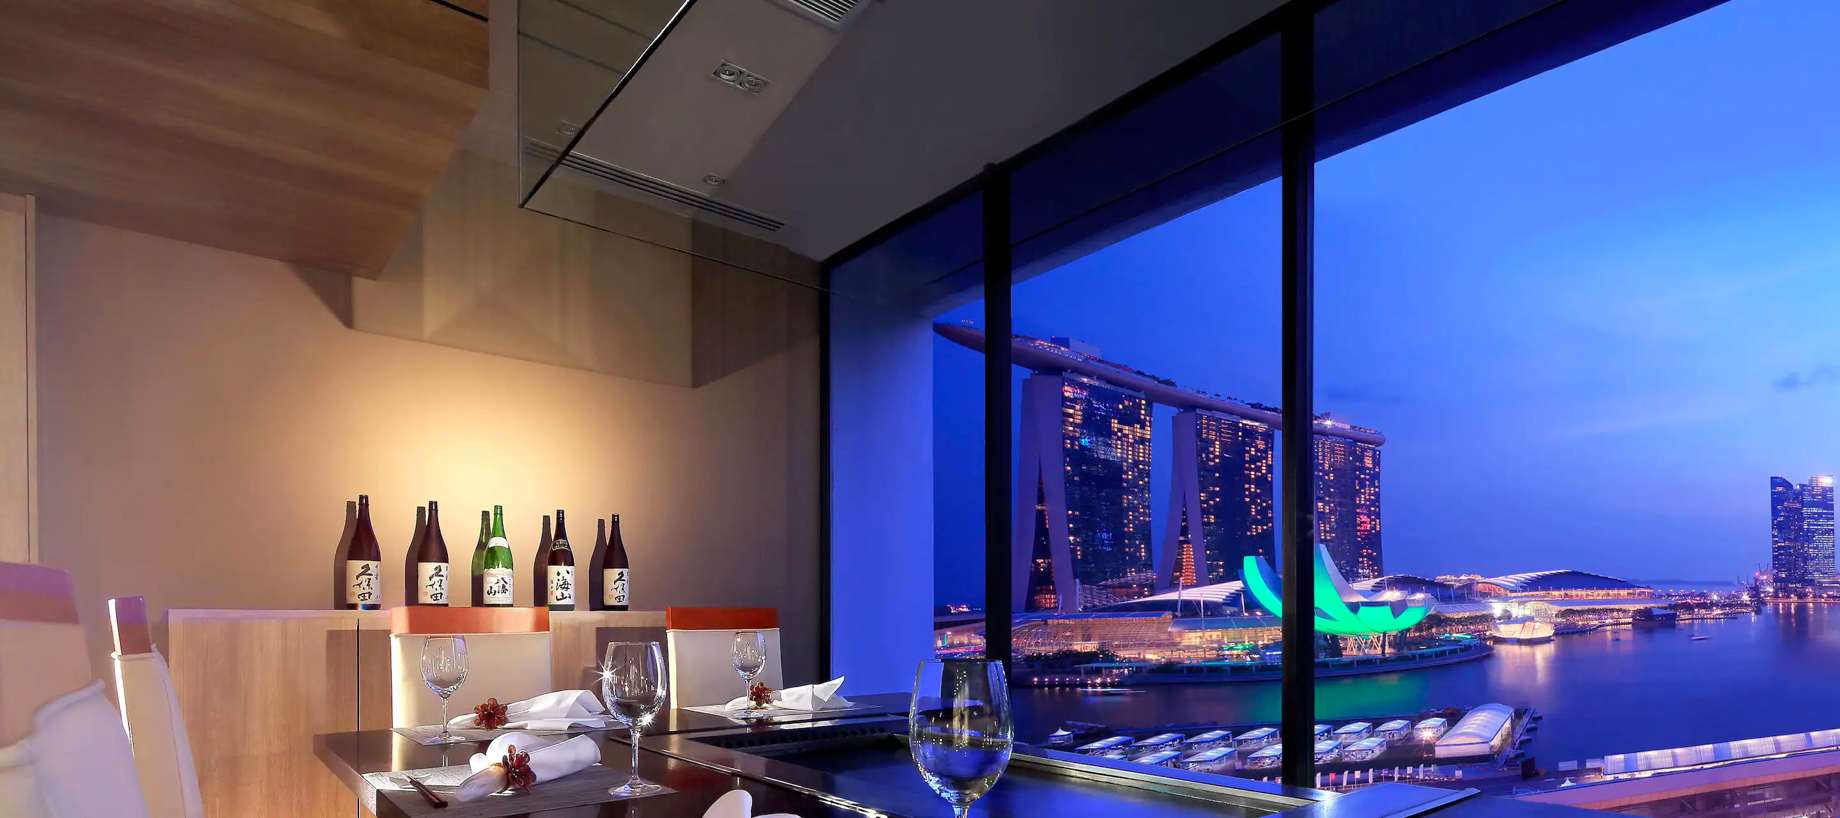 Mandarin Oriental, Singapore Hotel – Singapore – Teppan-Ya Restaurant